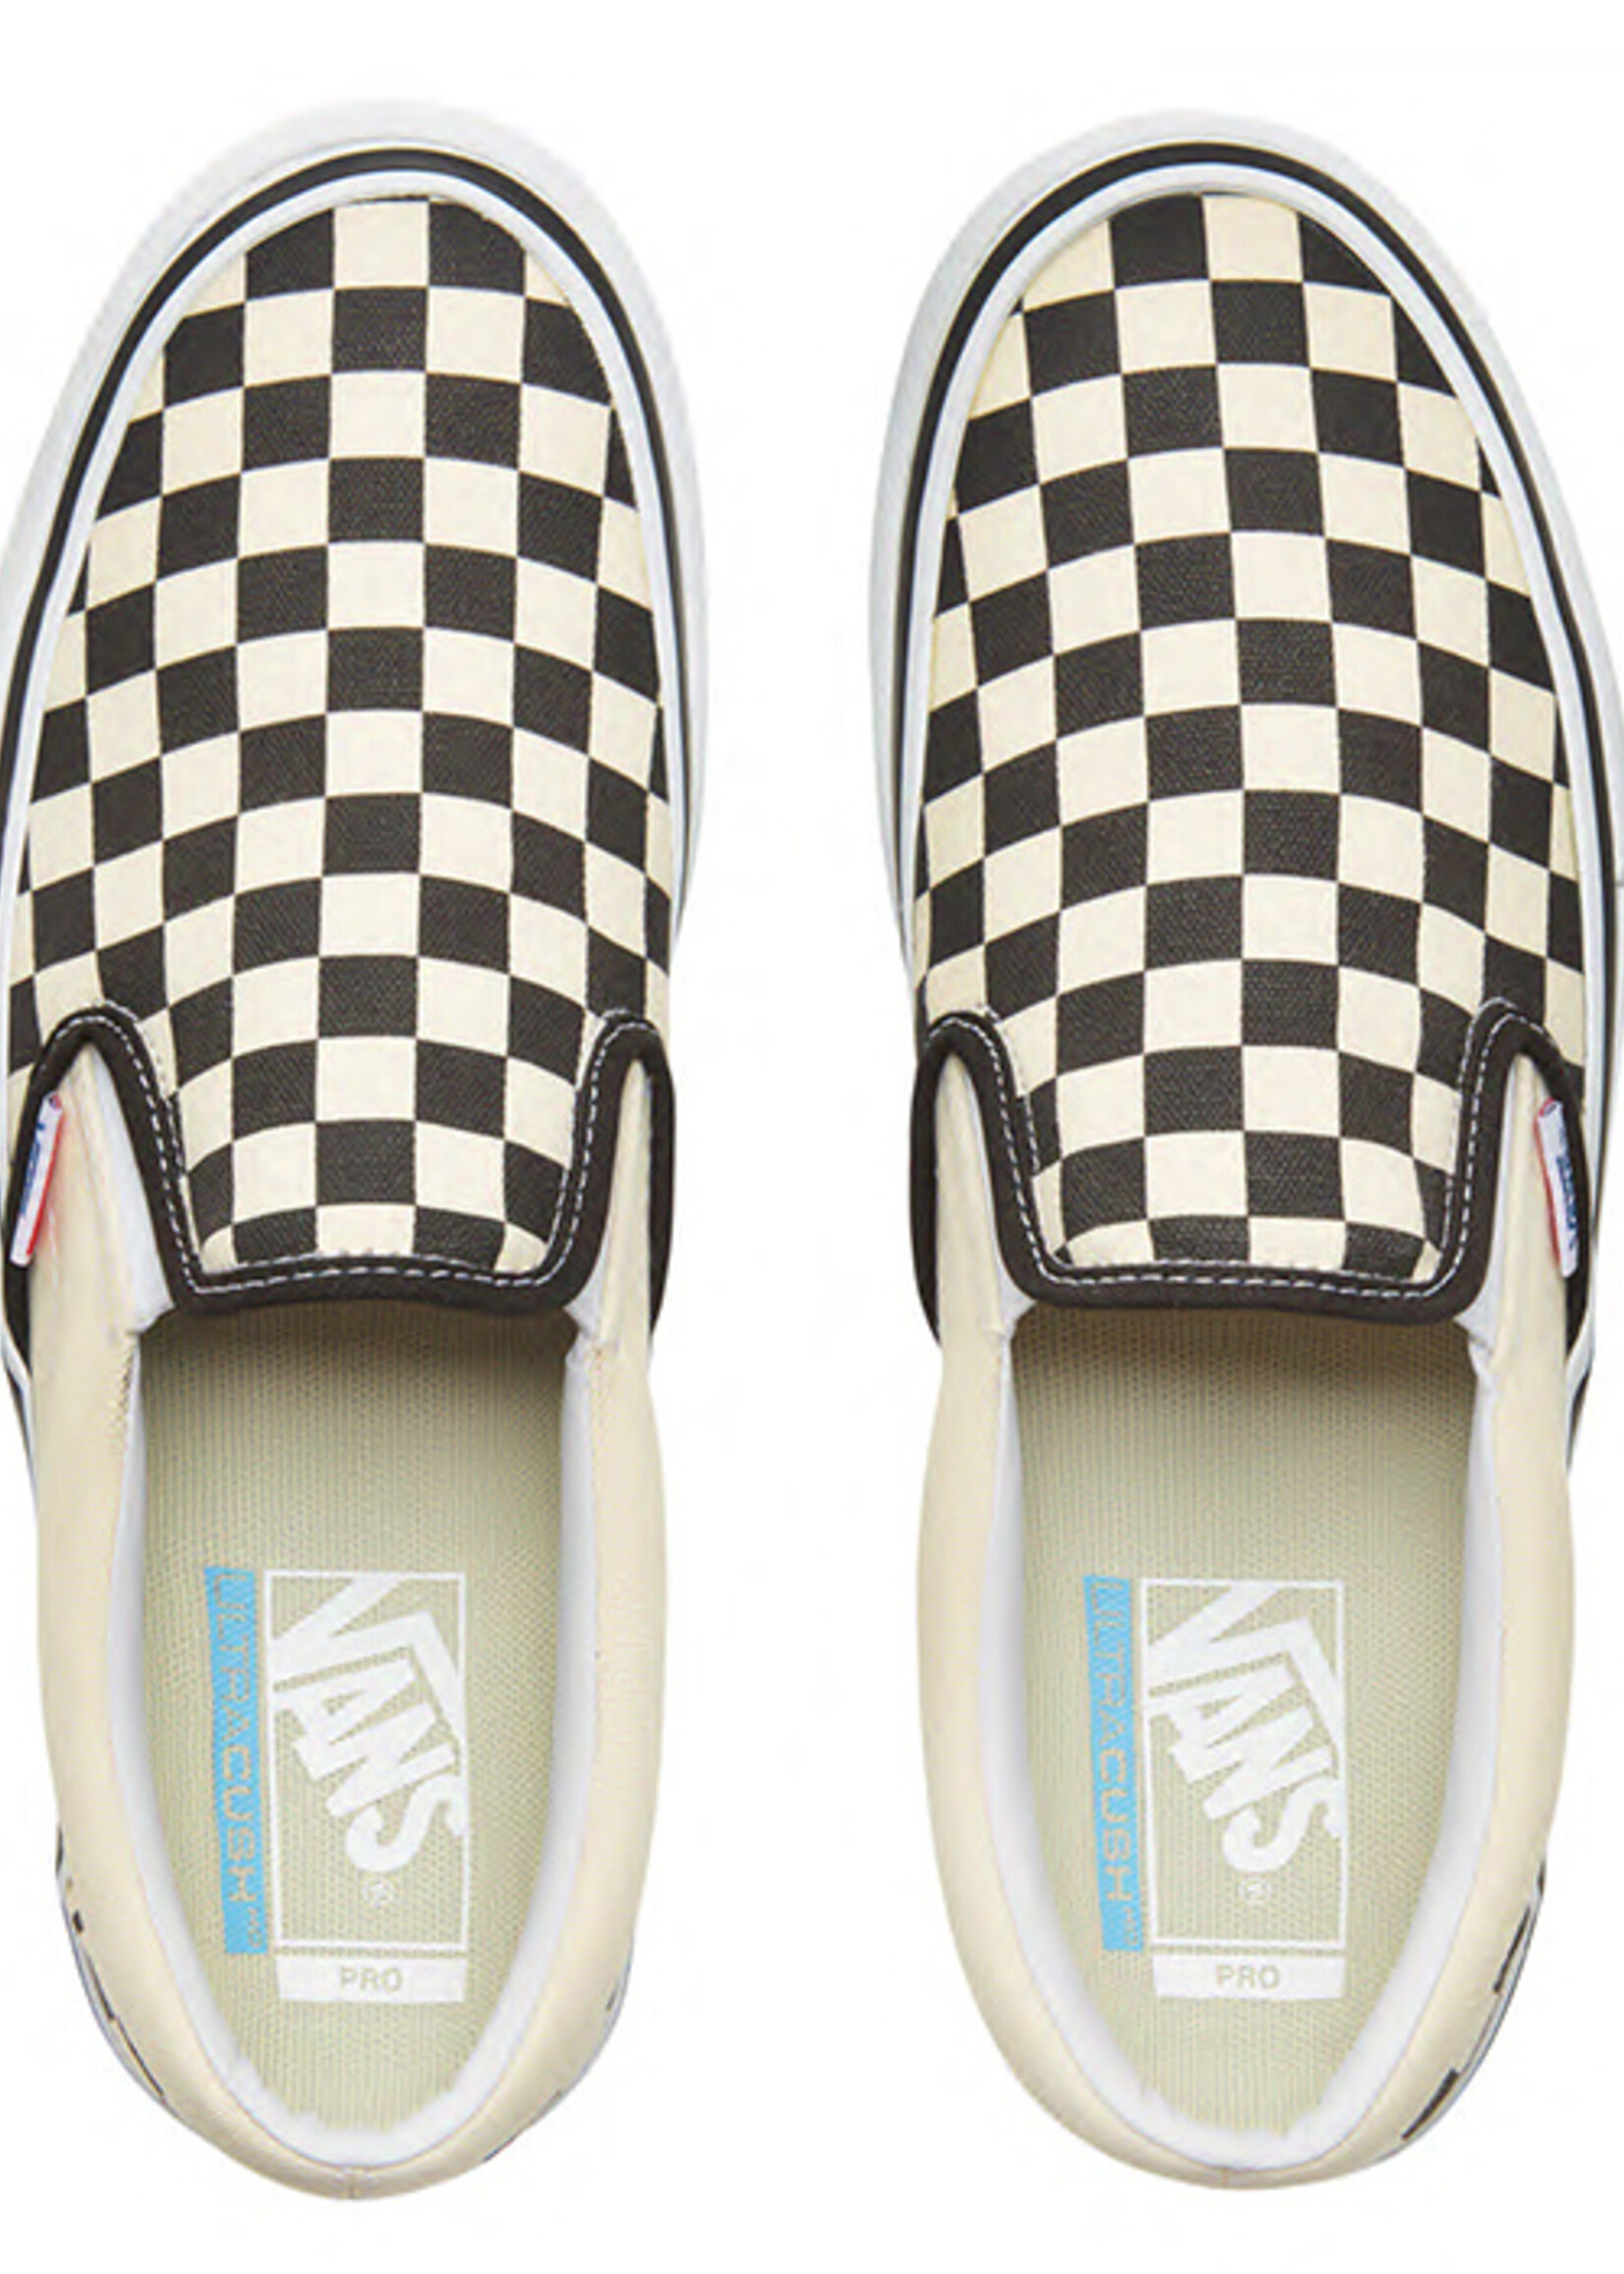 Vans Slip-On Pro Checkerboard Black White